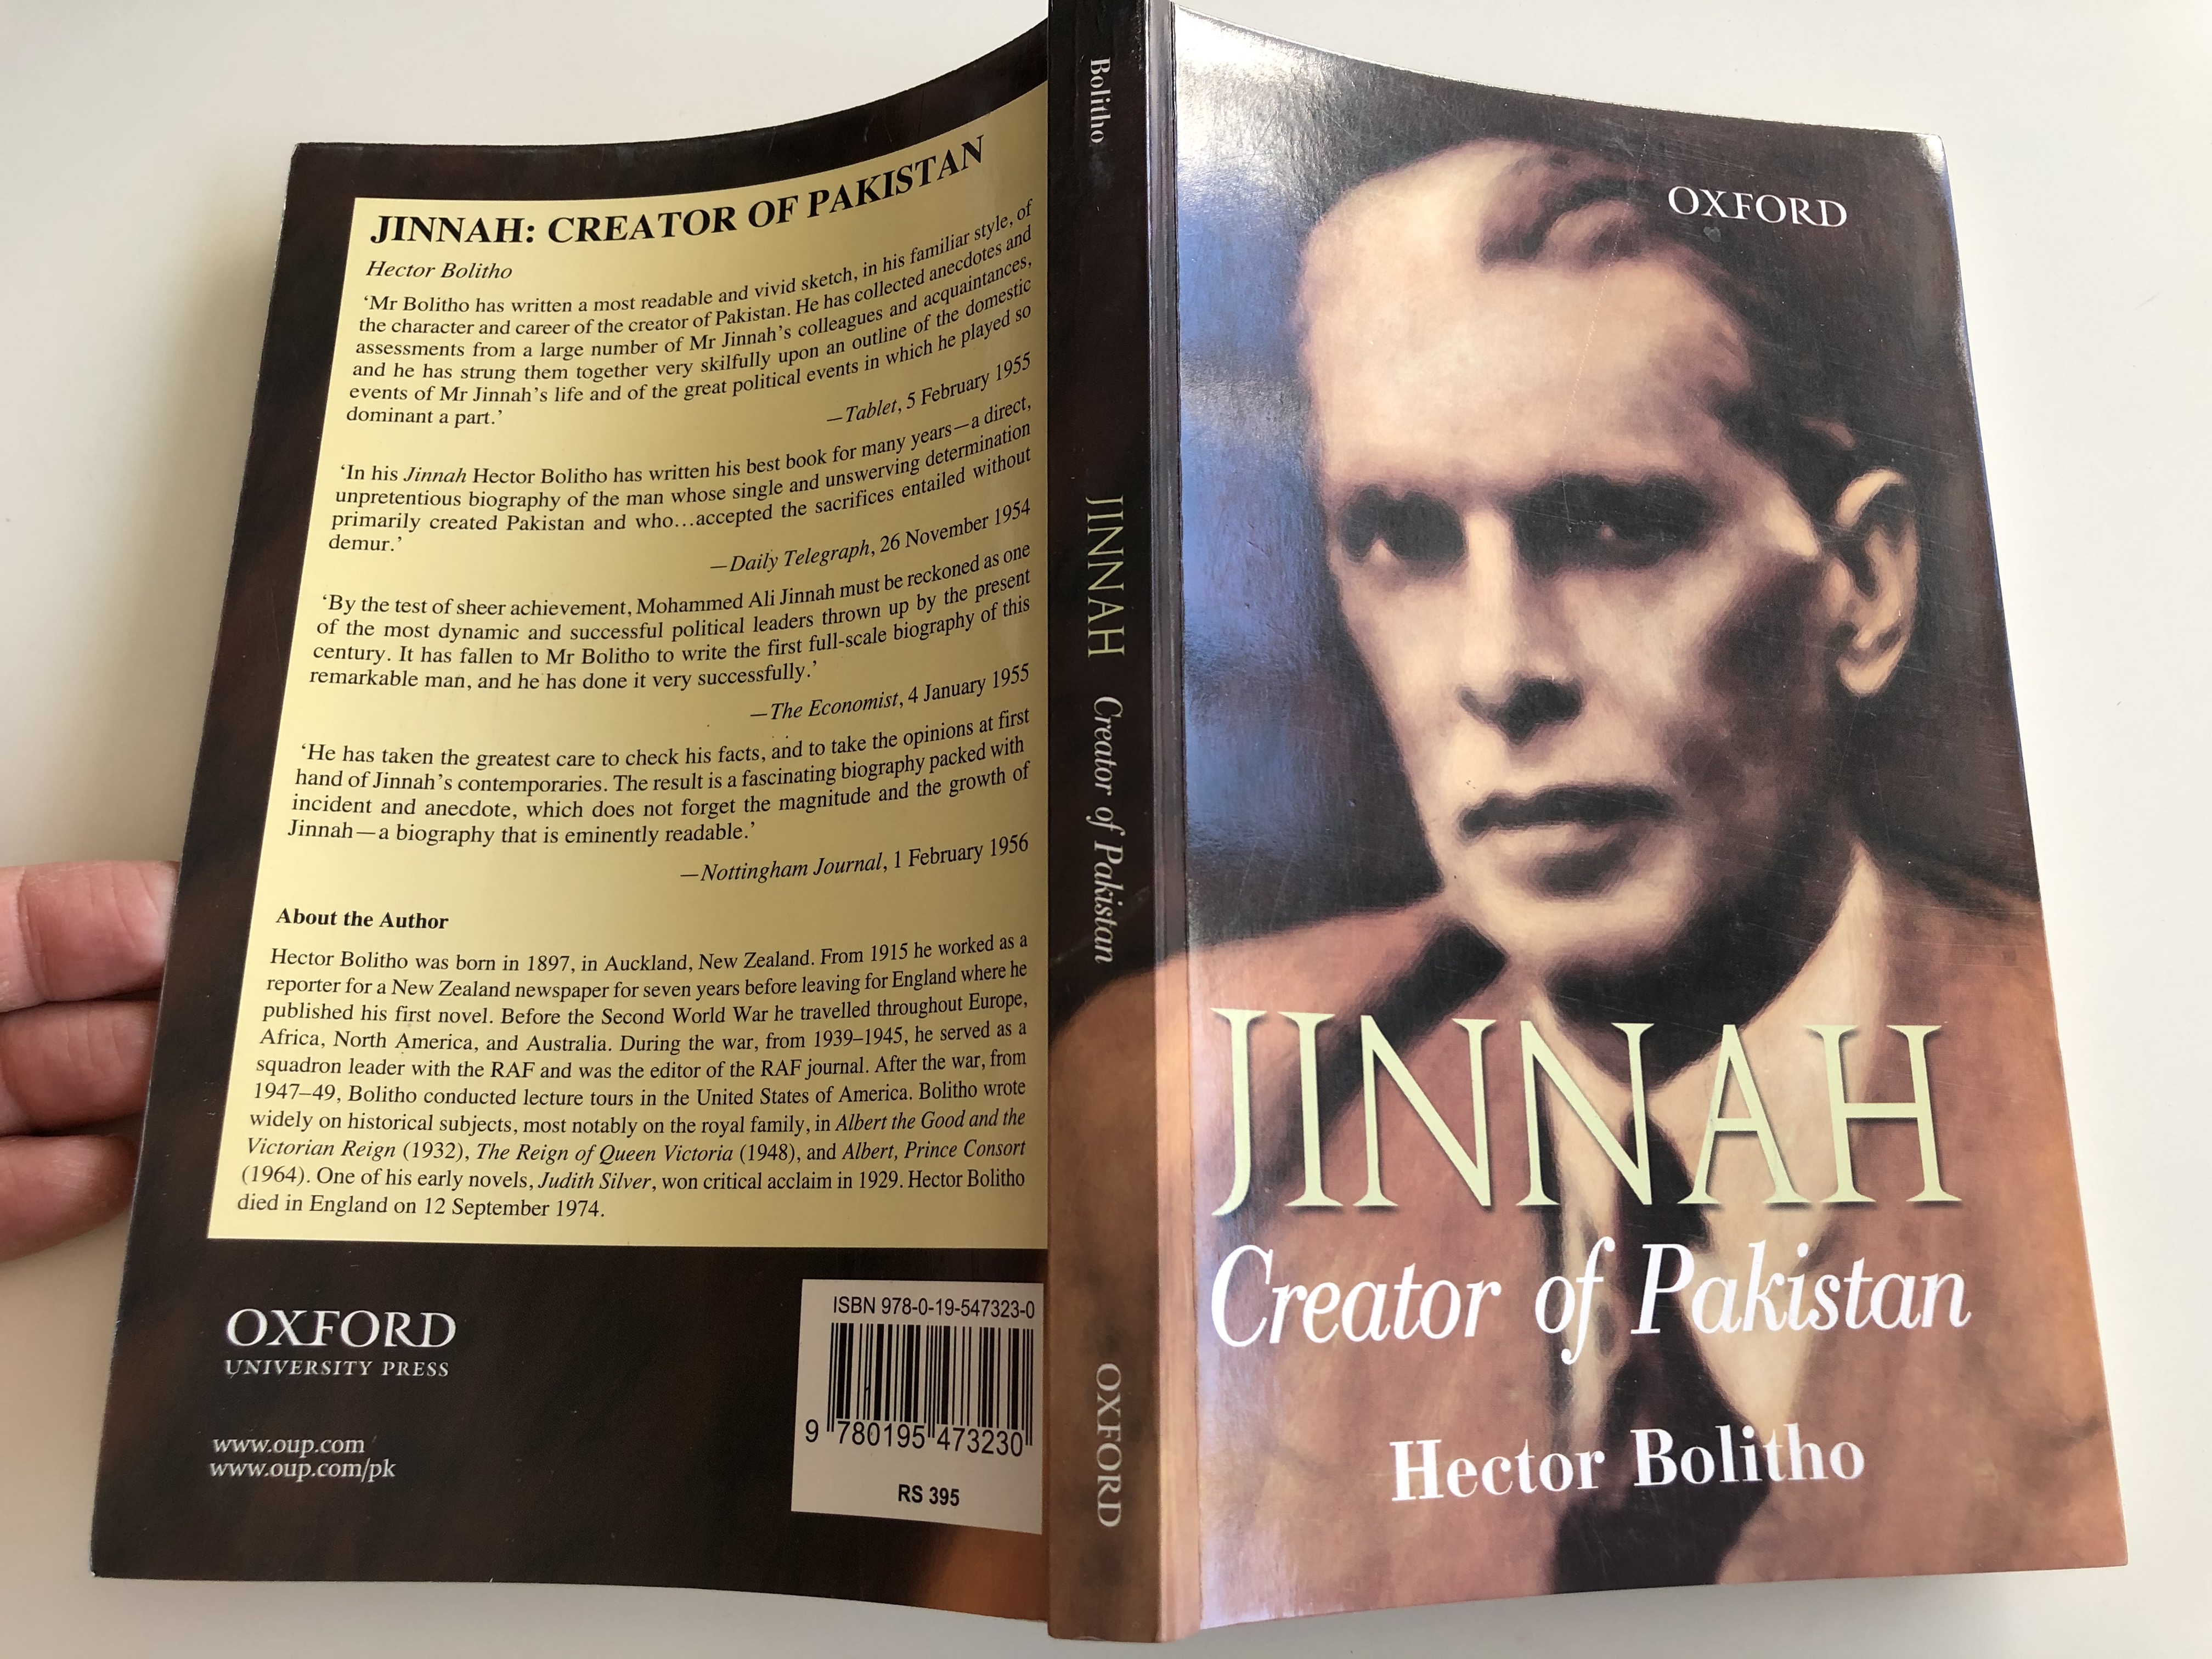 jinnah-creator-of-pakistan-by-hector-bolitho-oxford-university-press-10.jpg